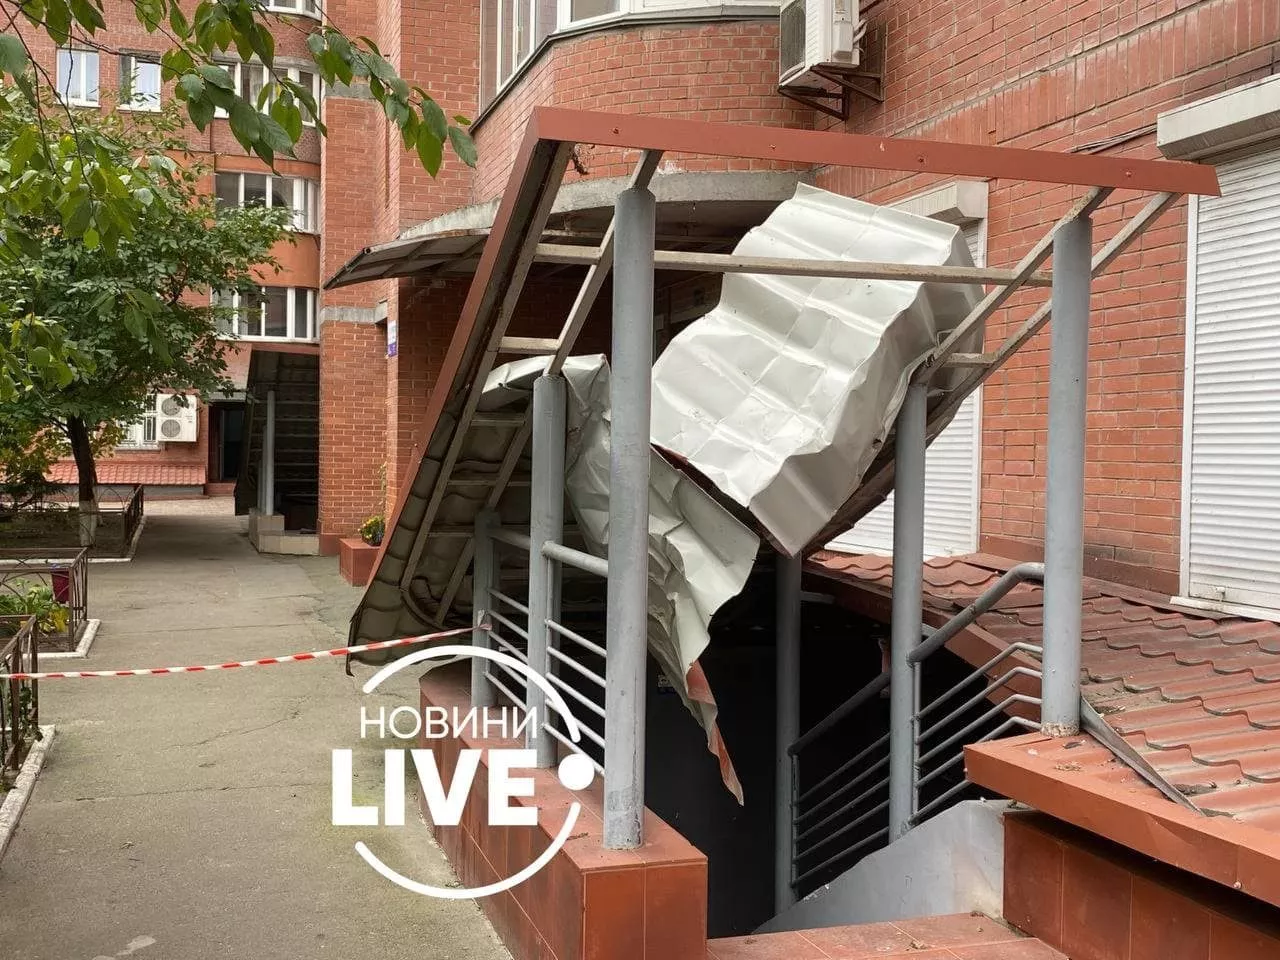 В Дарницком районе столицы с окна многоэтажки выпала женщина / Фото: Новини LIVE